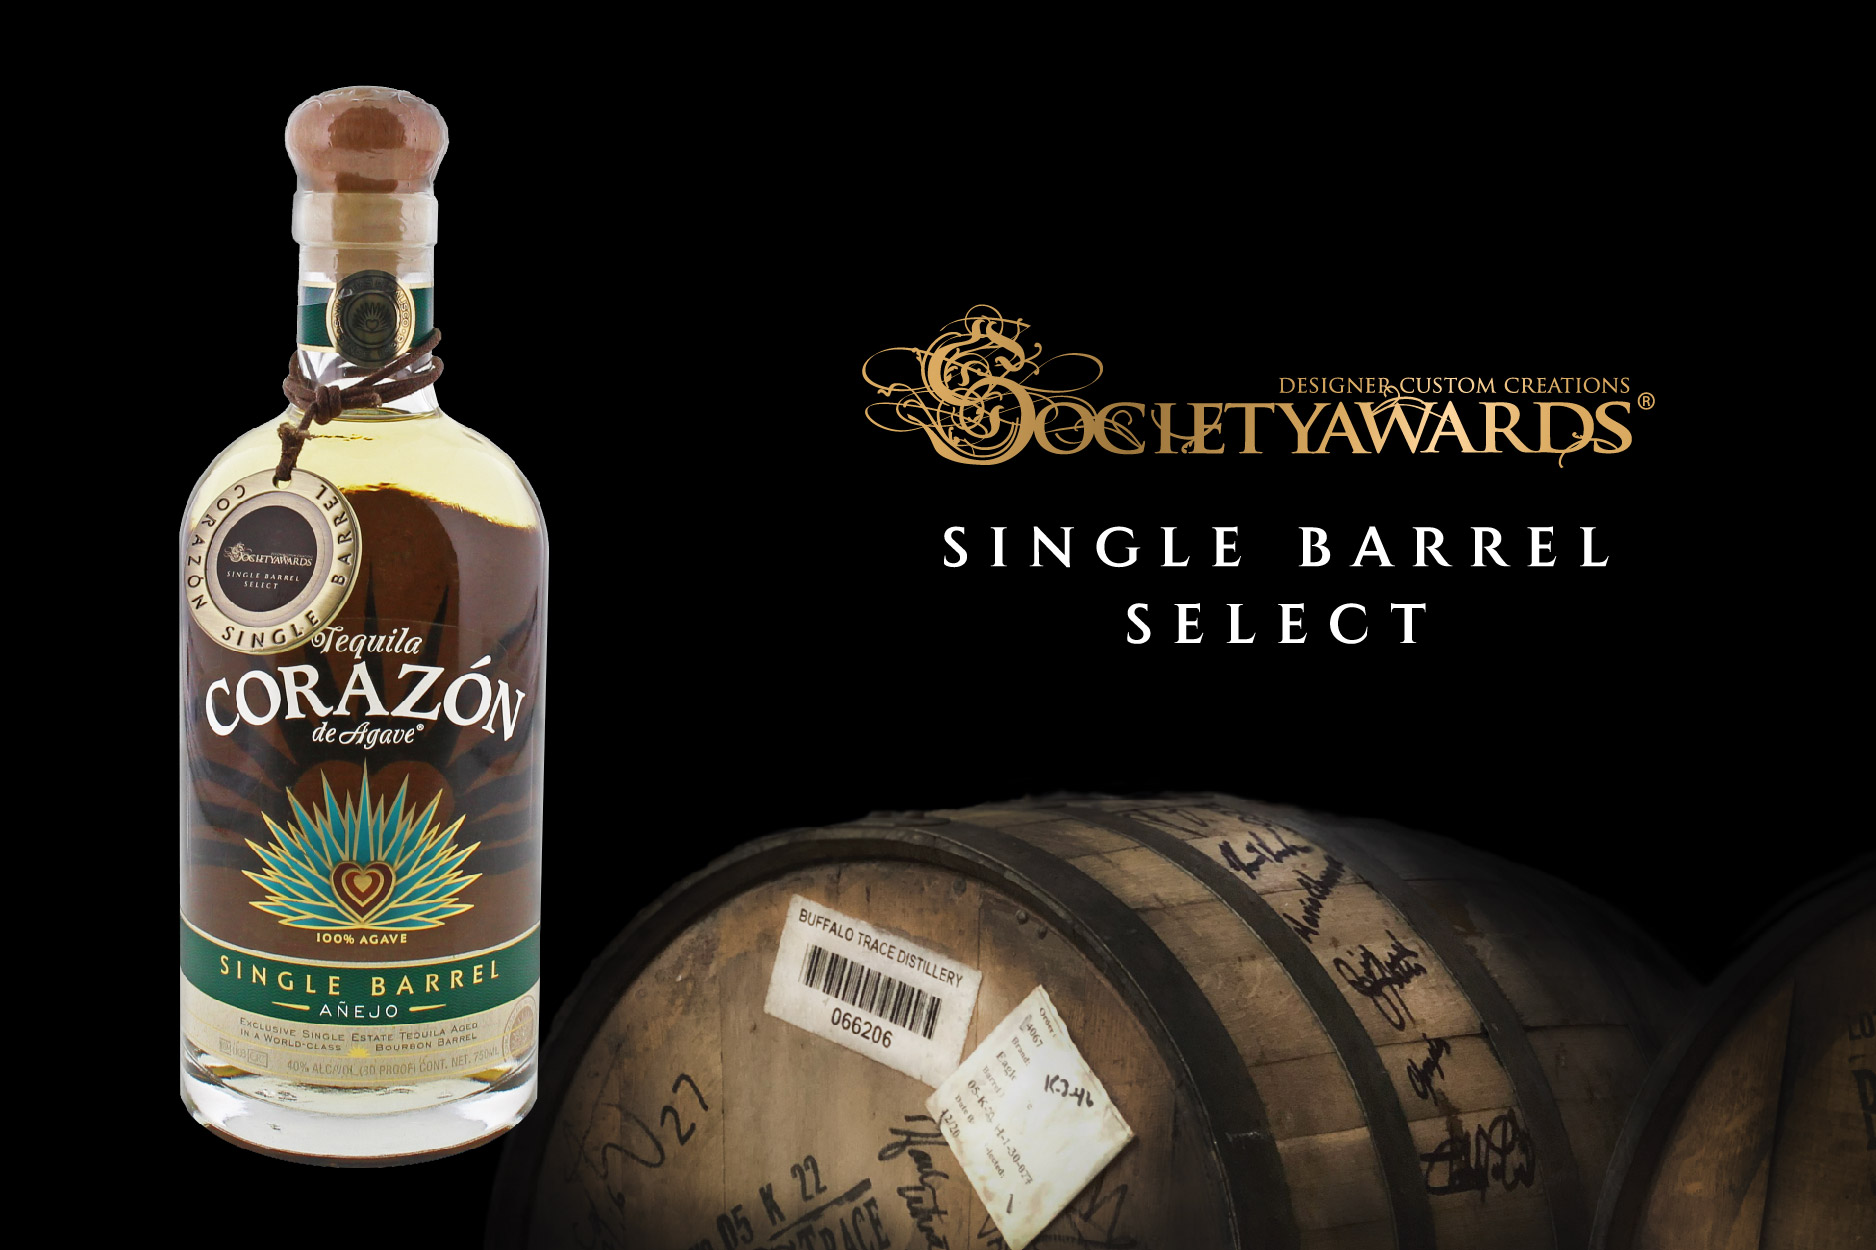 Bourbon Barrel Aged Añejo Tequila from Society Awards